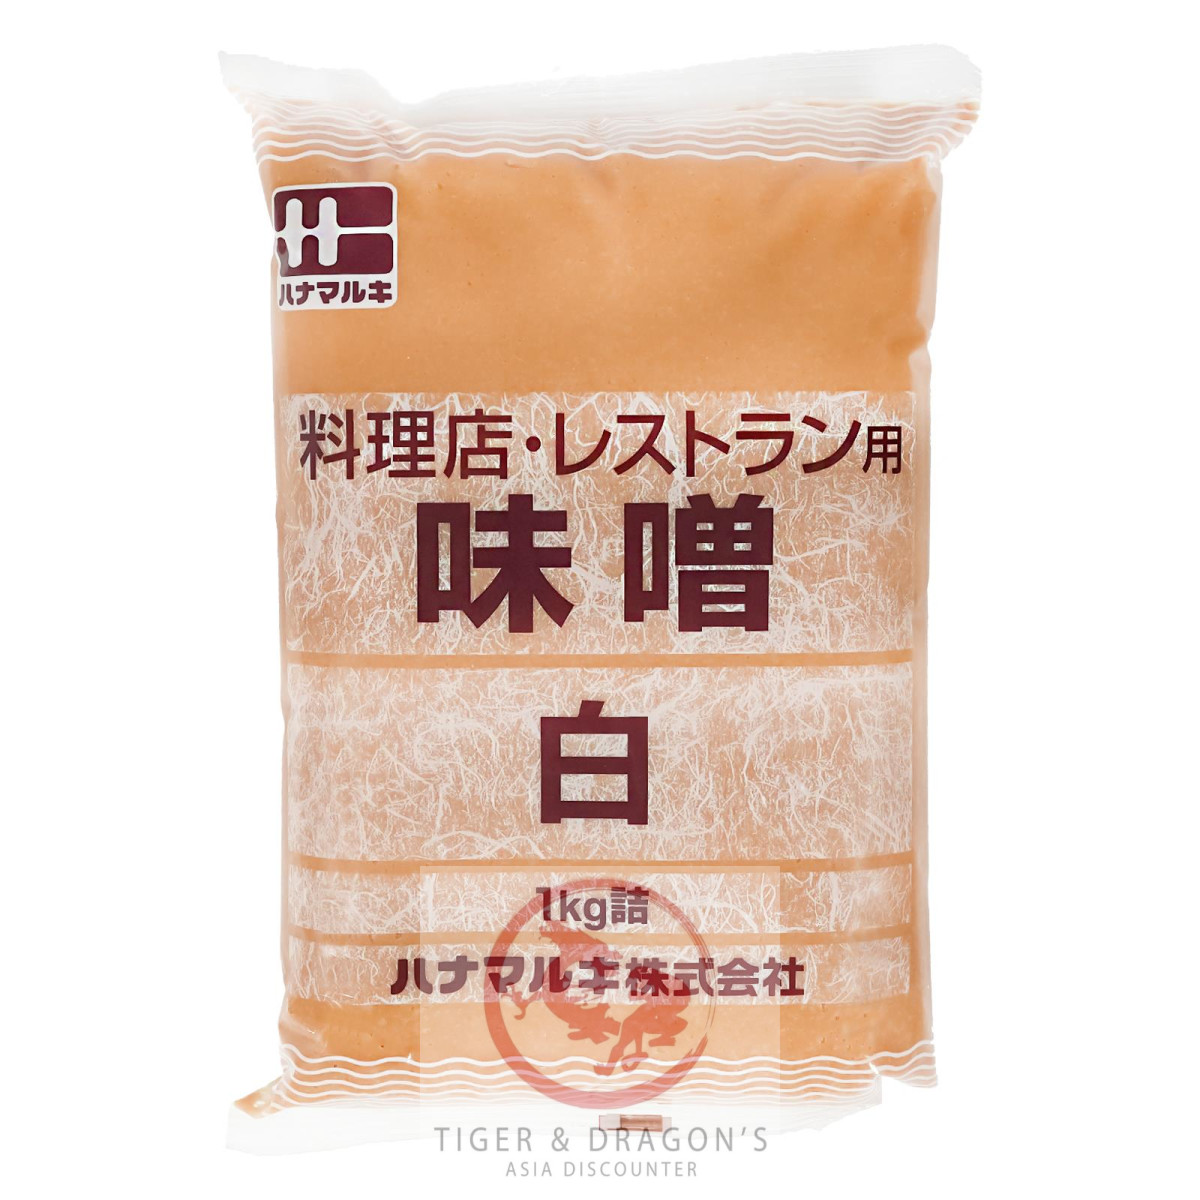 Hanamaruki Shiro Miso Paste 1kg